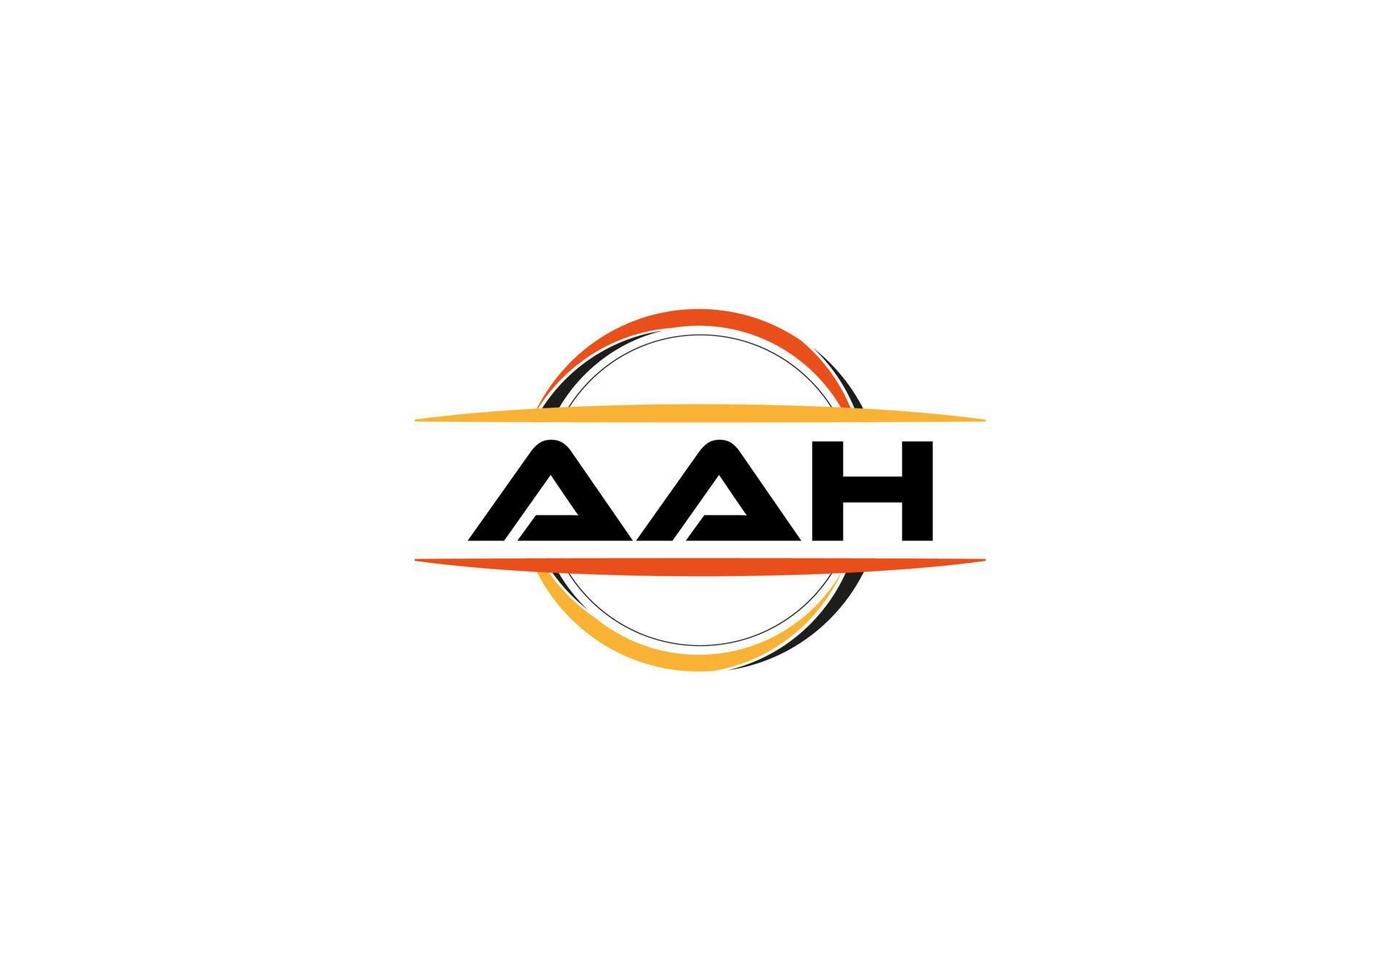 aah letra realeza elipse forma logo. aah cepillo Arte logo. aah logo para un compañía, negocio, y comercial usar. vector